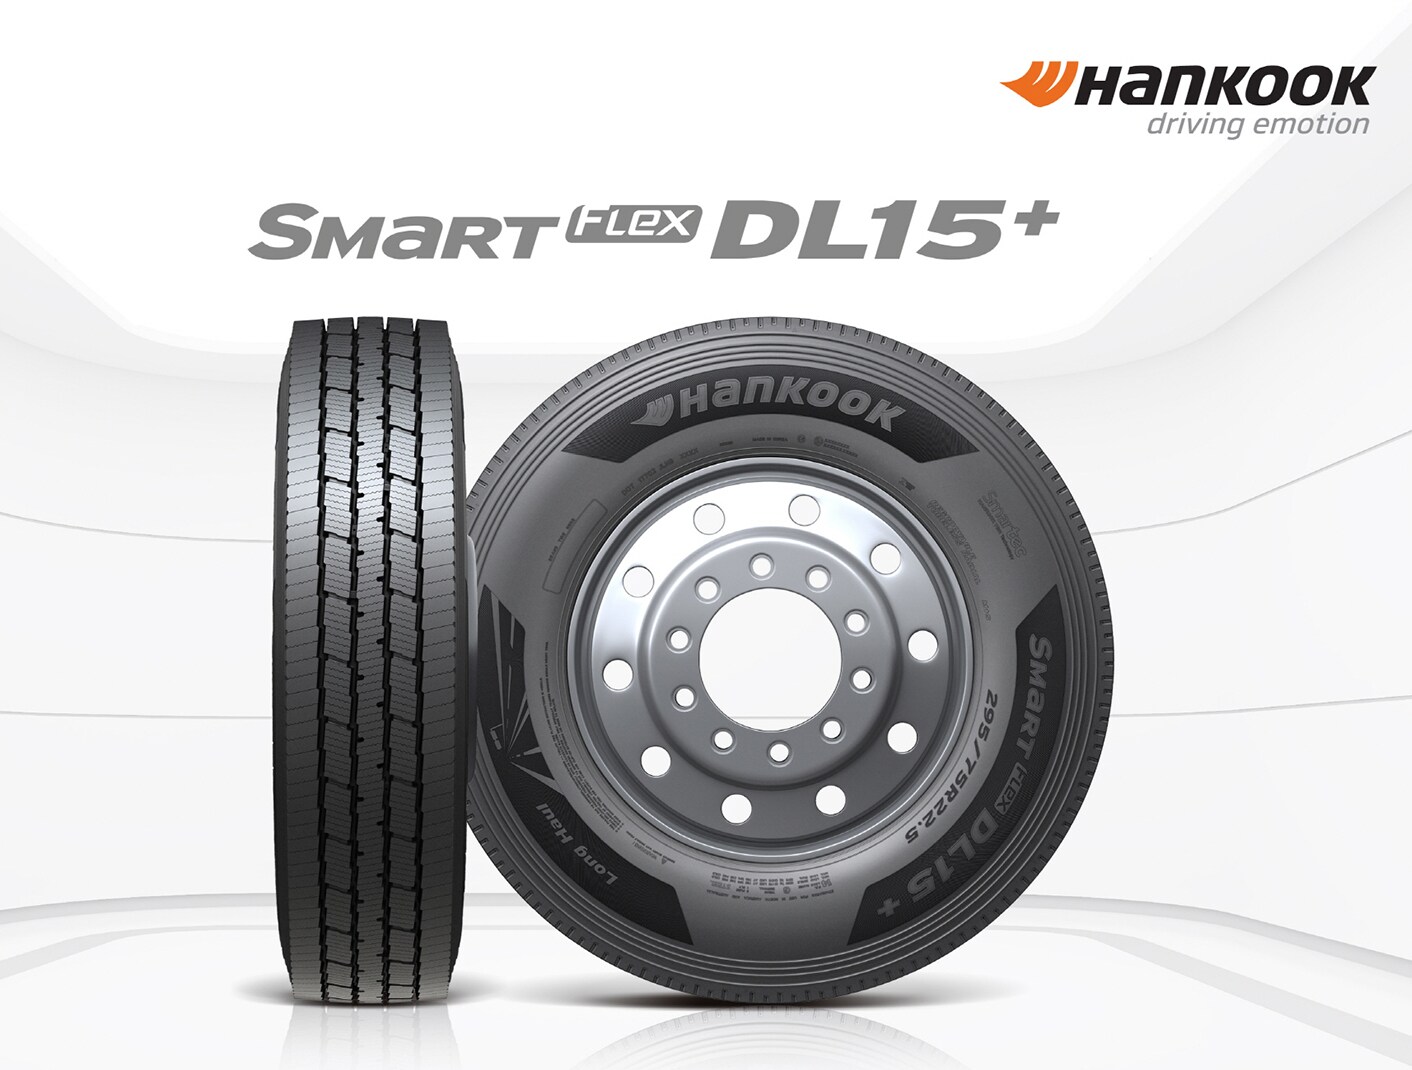 Hankook Tire Debuts New SmartFlex DL15+ TBR Product in the U.S.